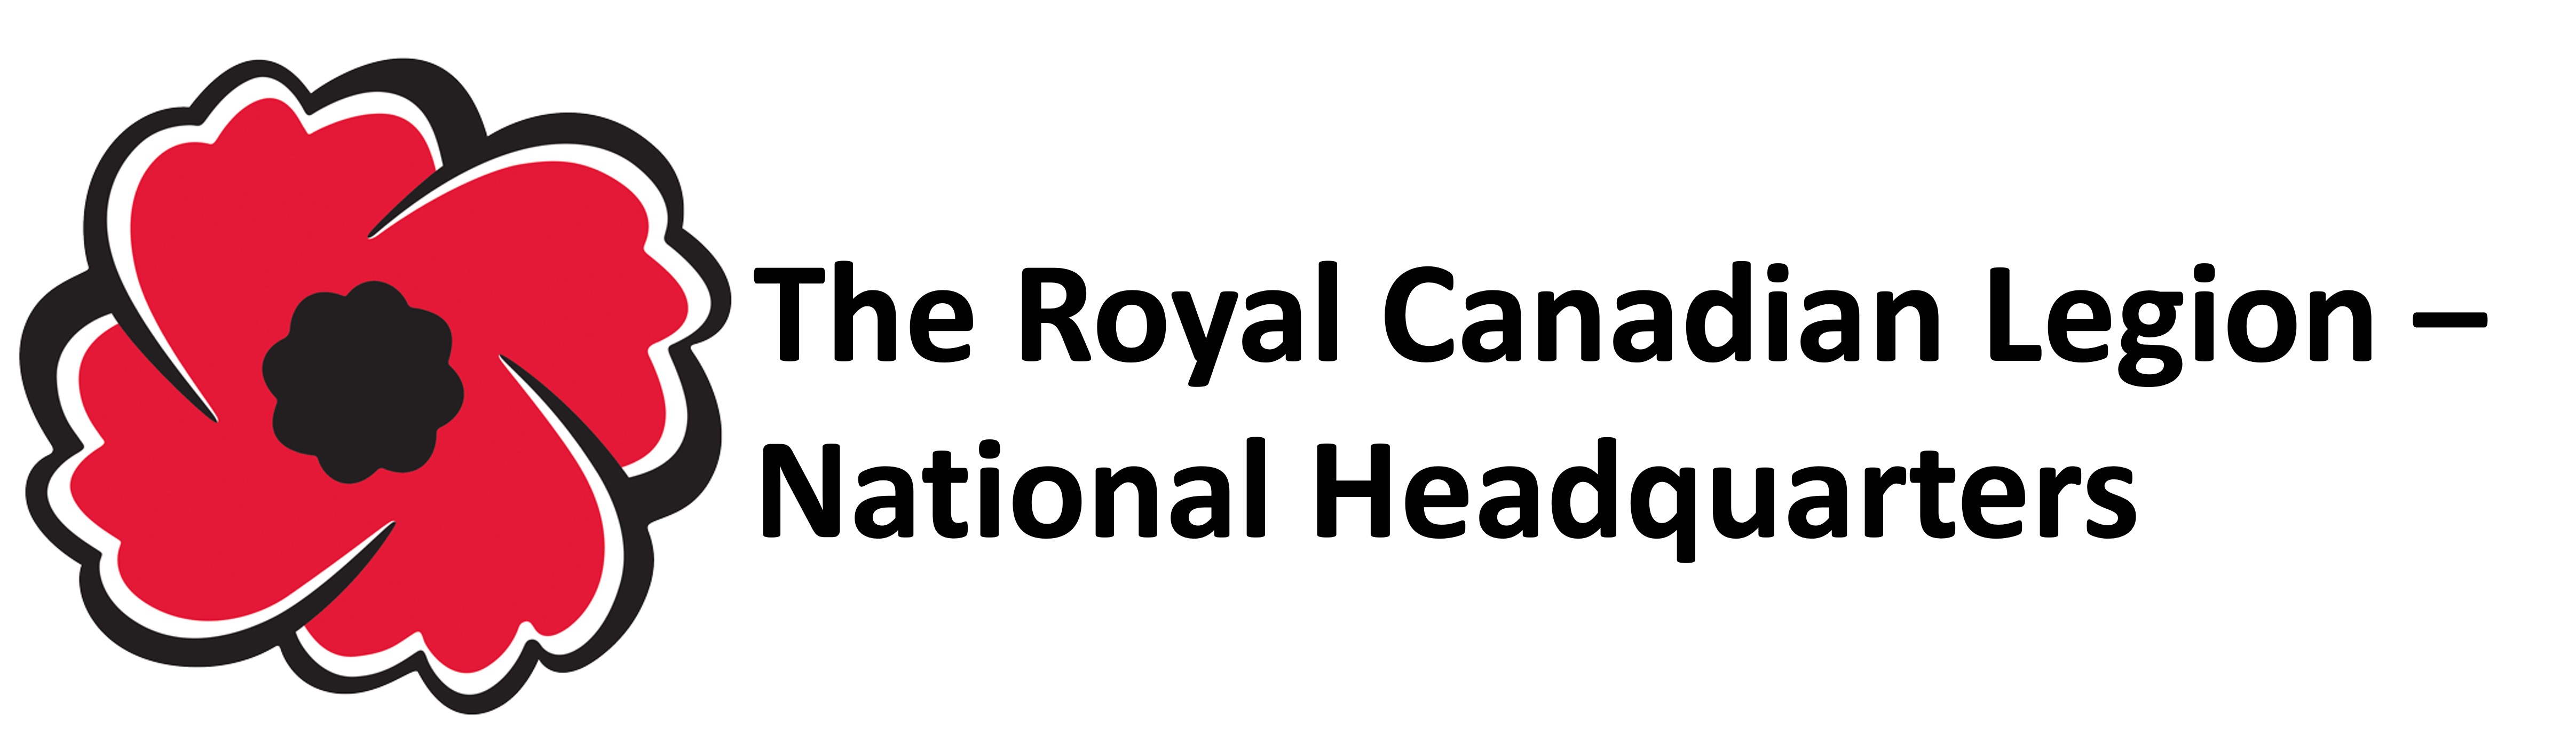 The Royal Canadian Legion – National Headquarters